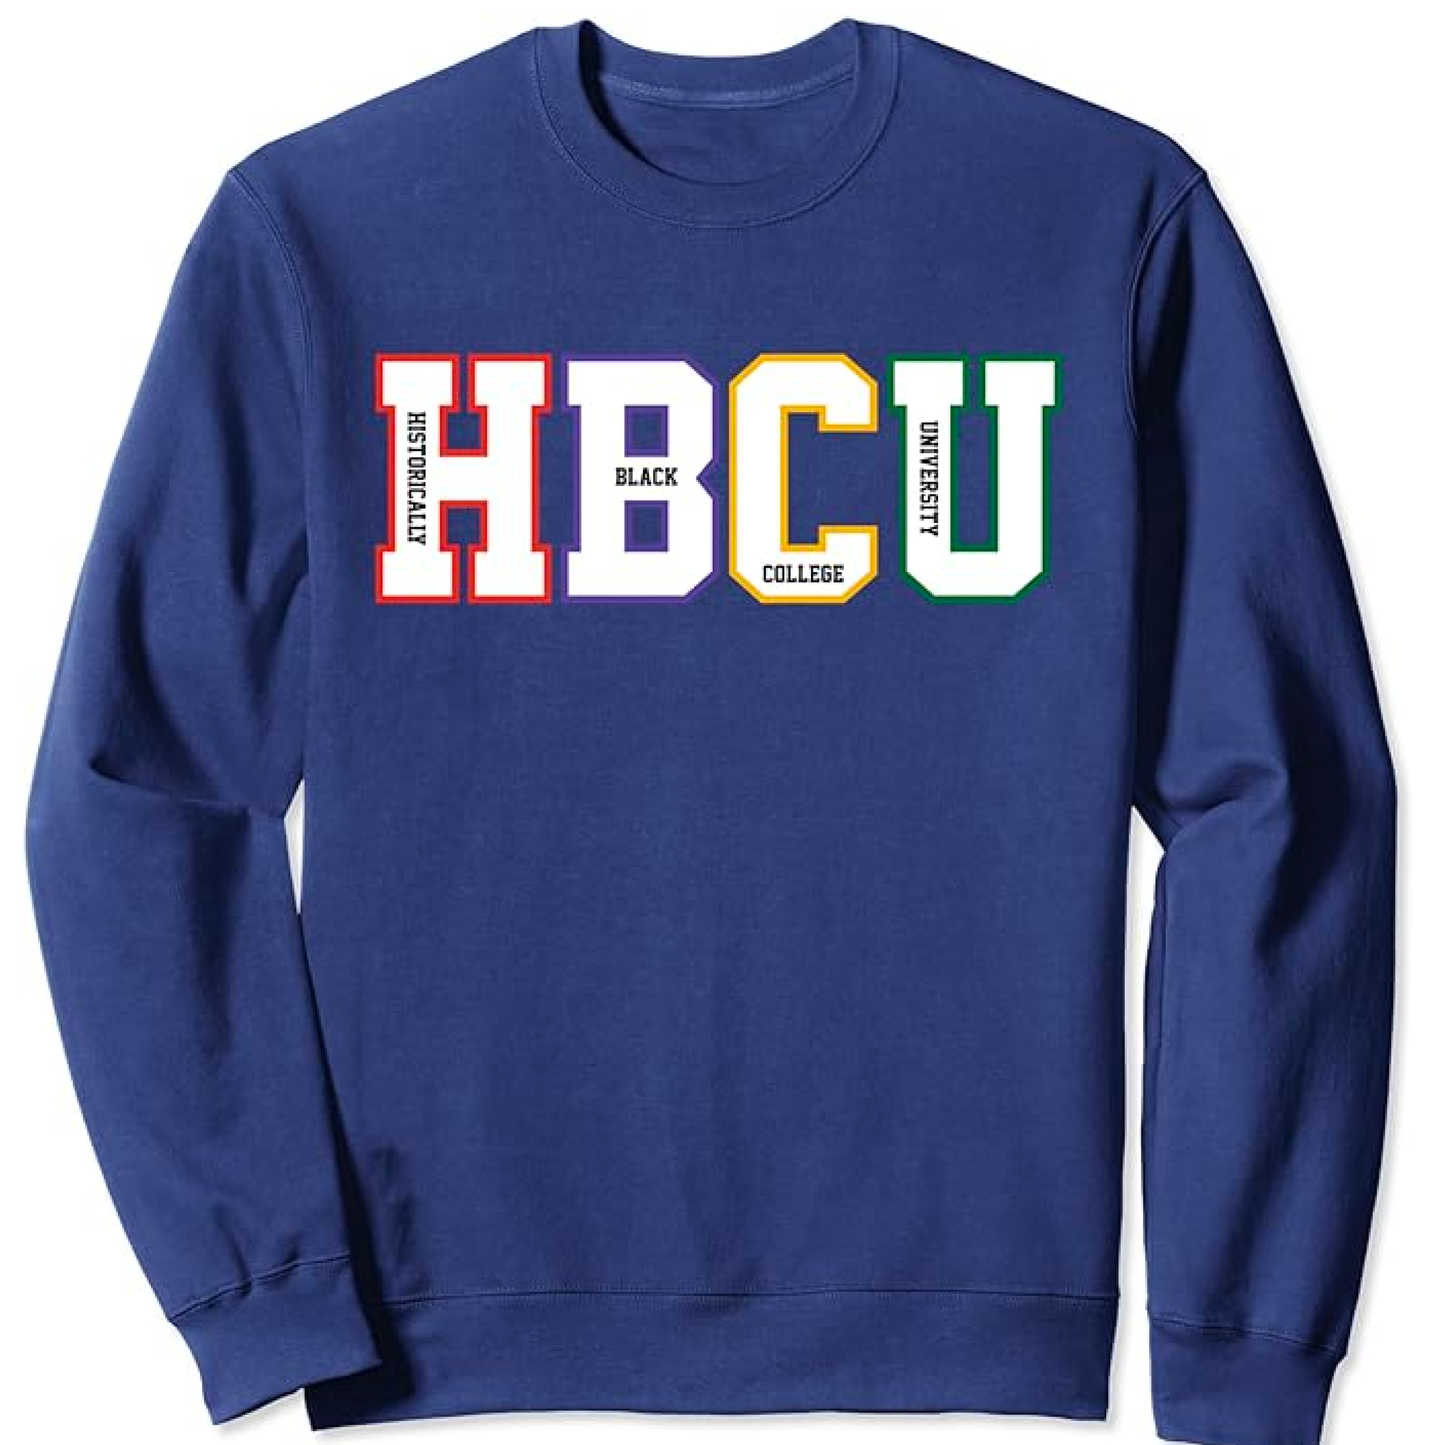 Historically Black College University Student HBCU Made Sweatshirt